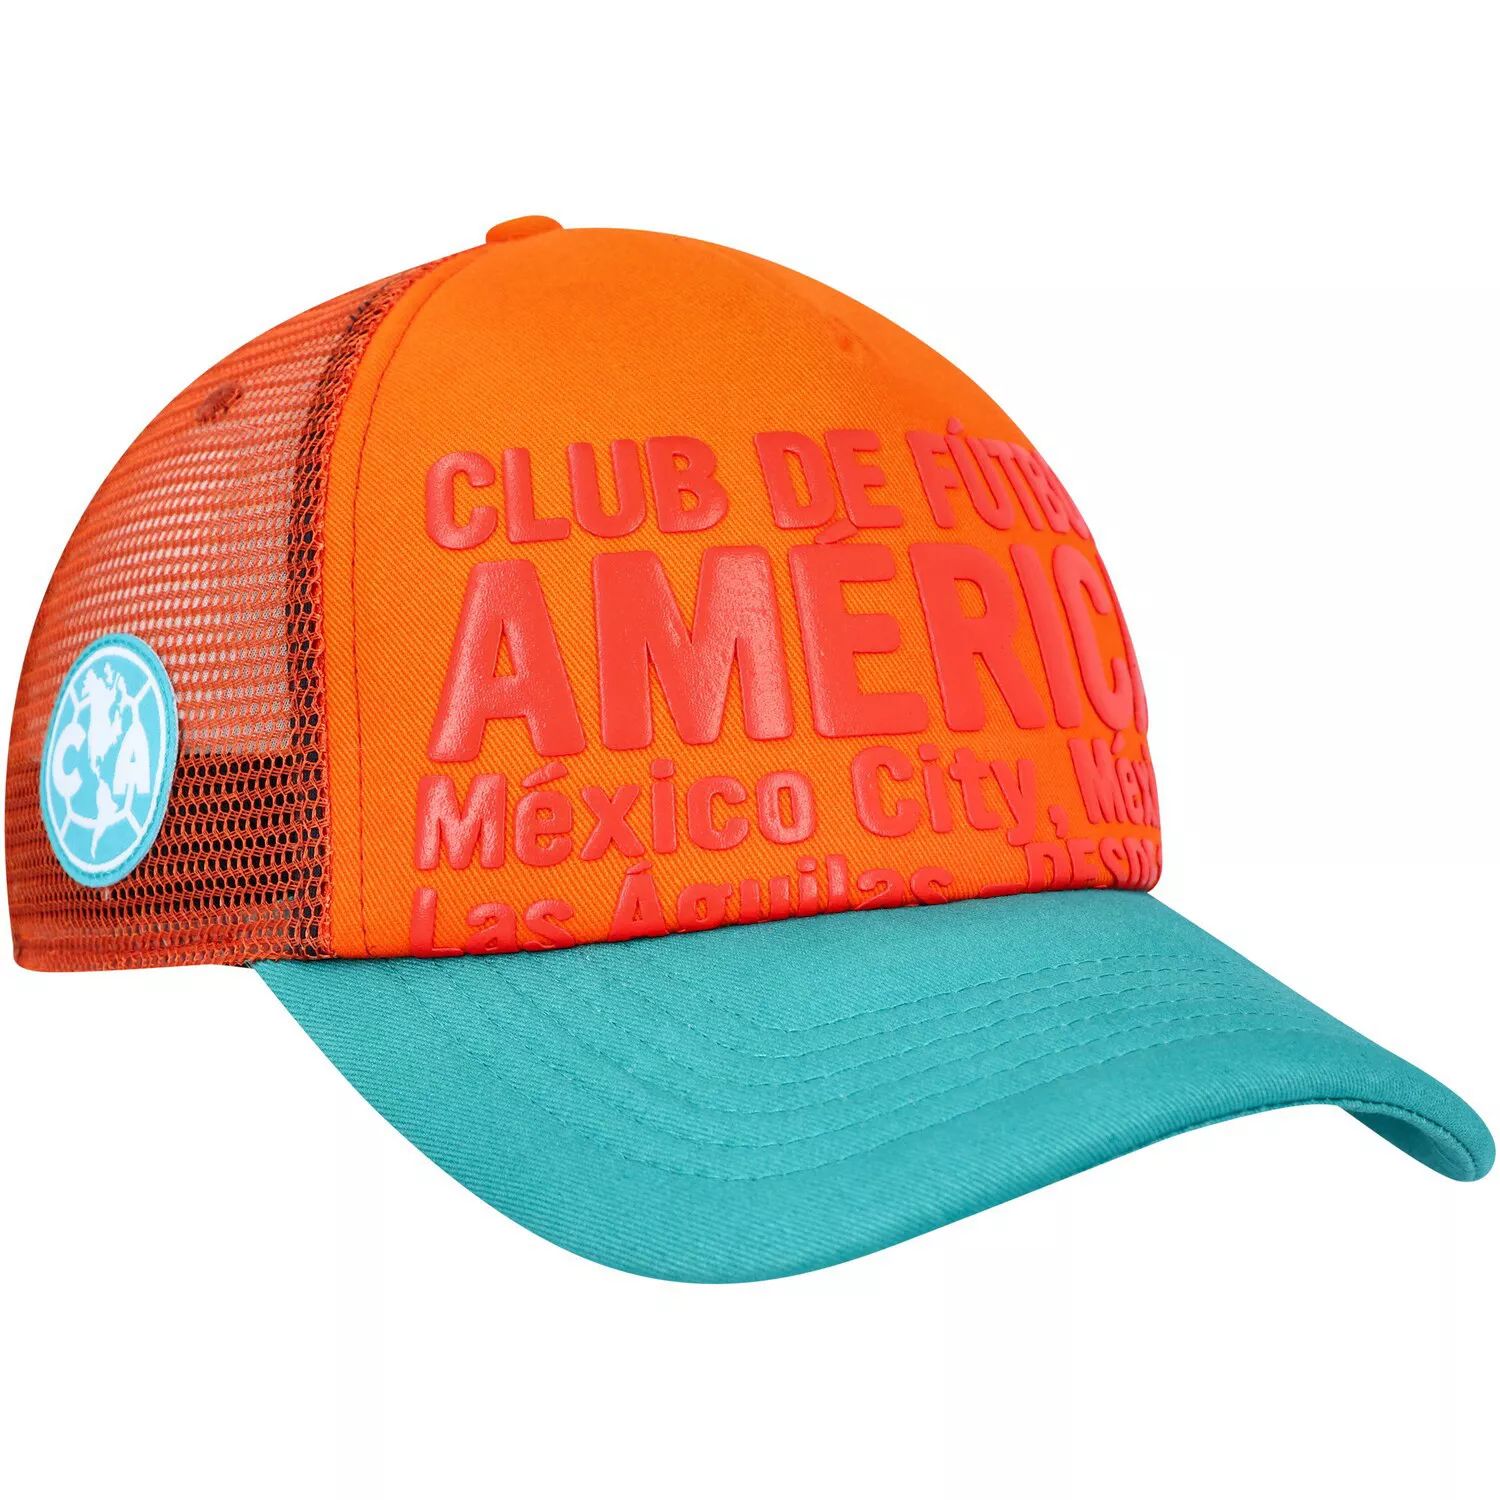 Мужская регулируемая шляпа Orange Club America Club Gold